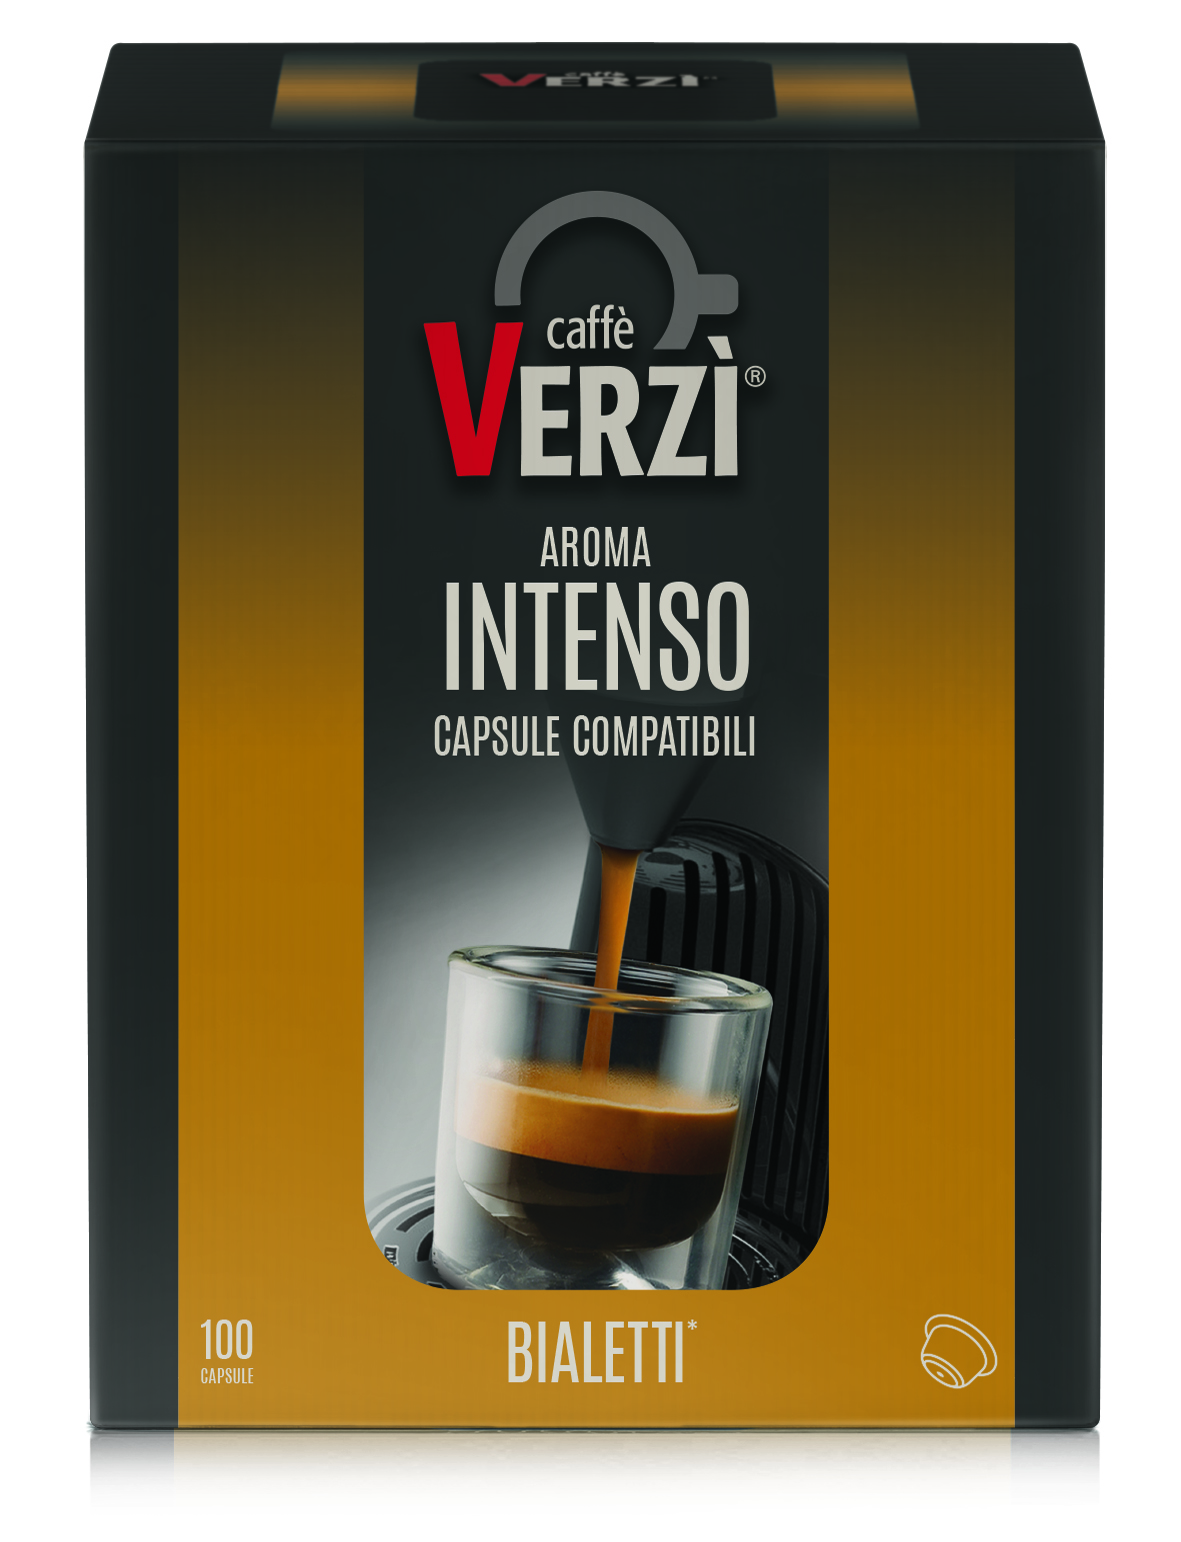 Capsule Compatibili Bialetti - Aroma Intenso - Verzì Caffè